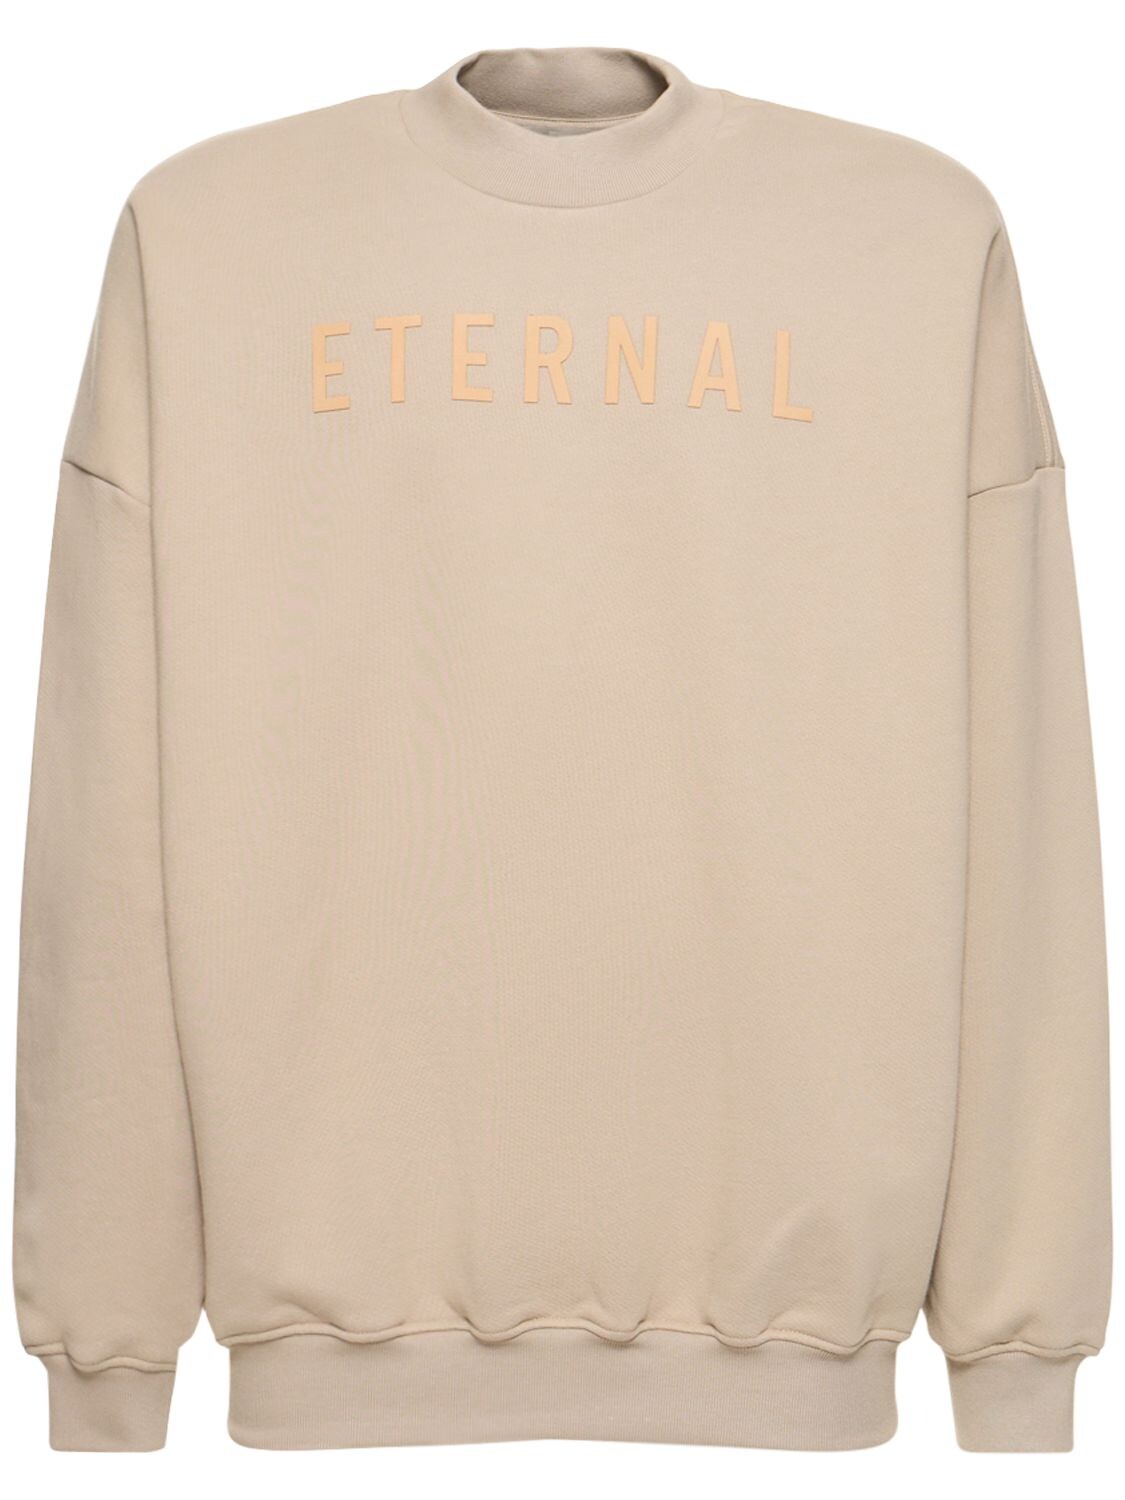 Fear Of God ‘eternal' Fleece Crewneck Sweatshirt In Beige